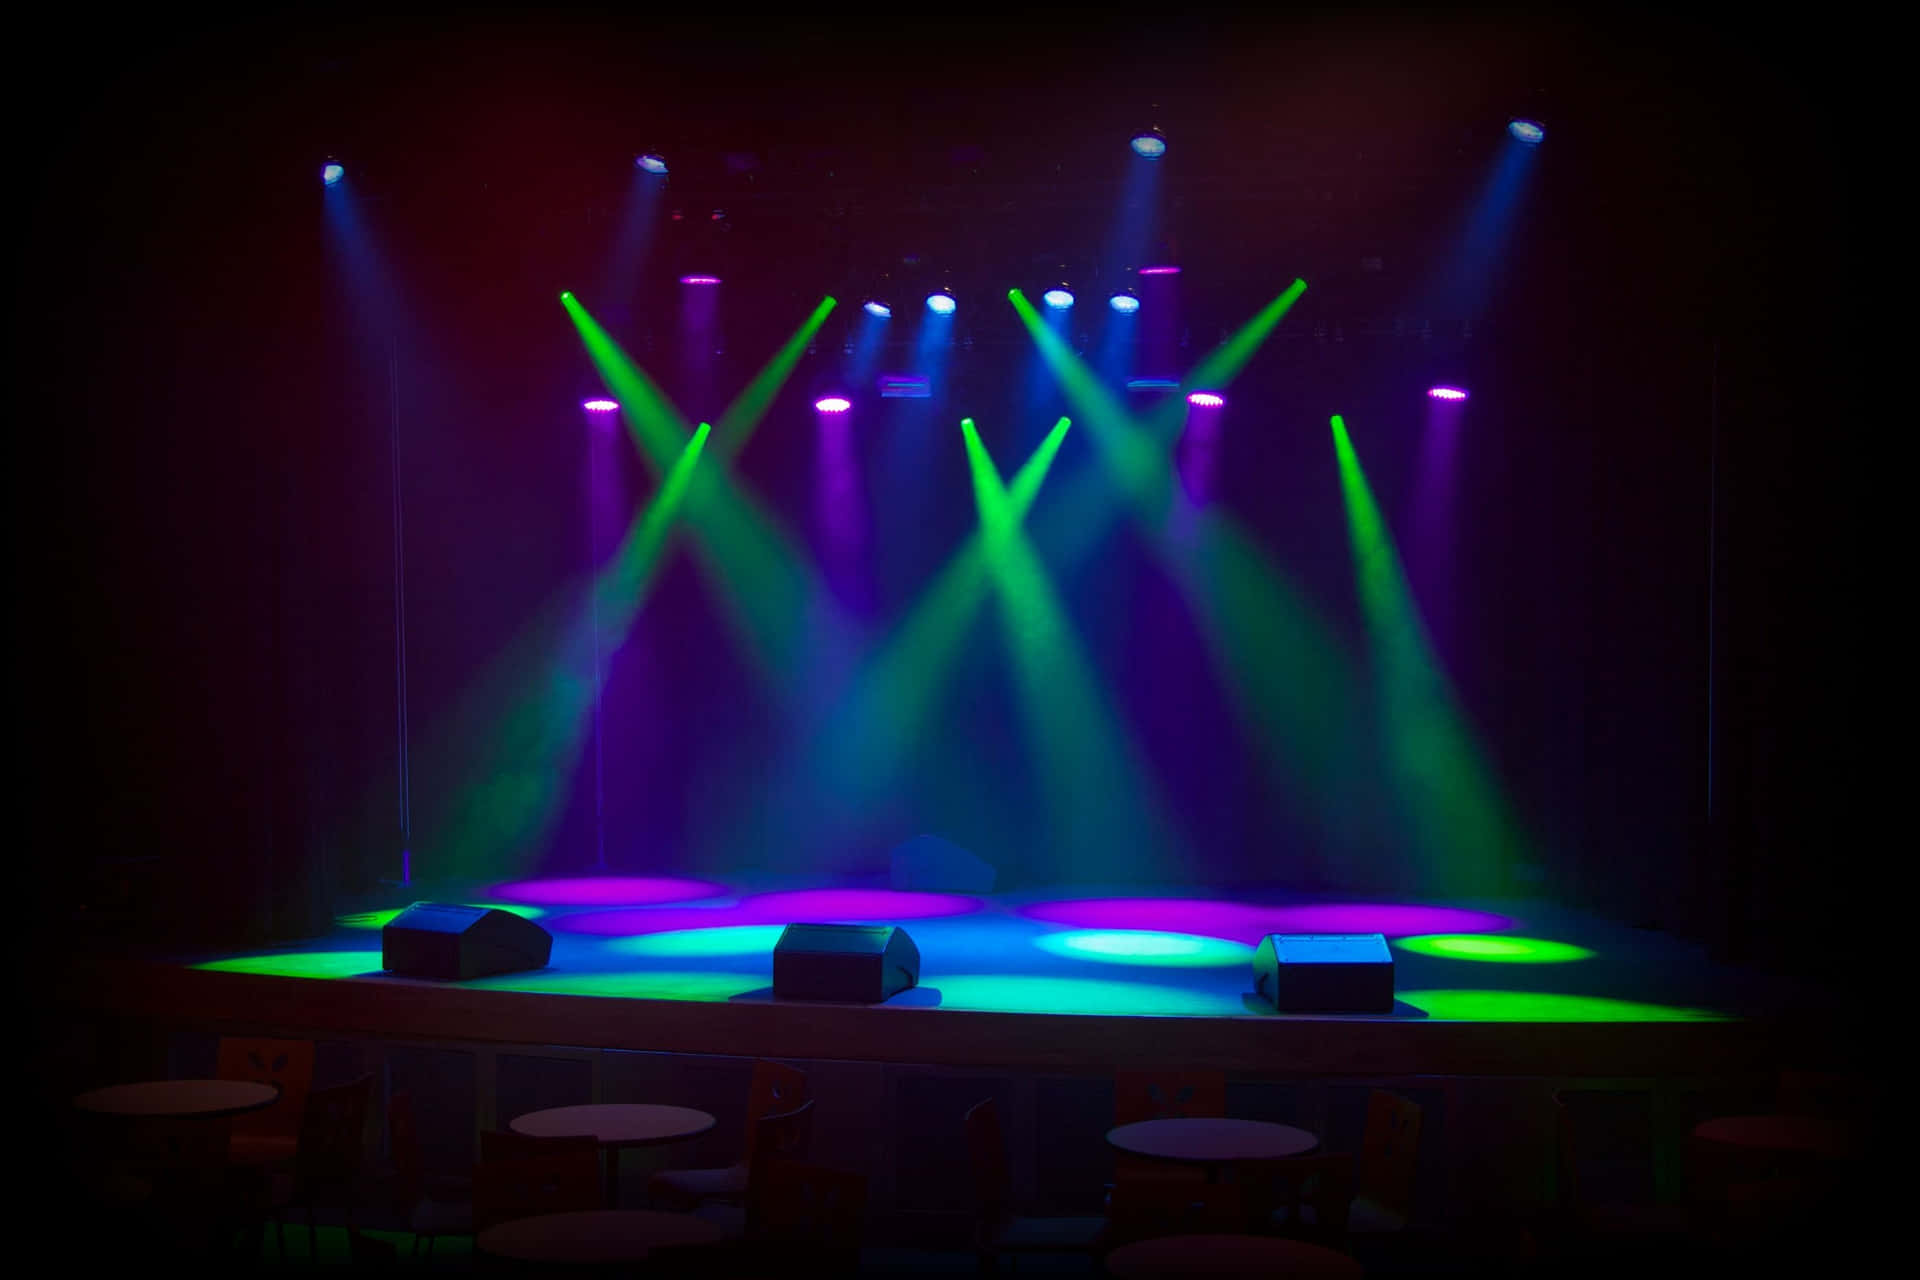 Mesmerising display of stage lights